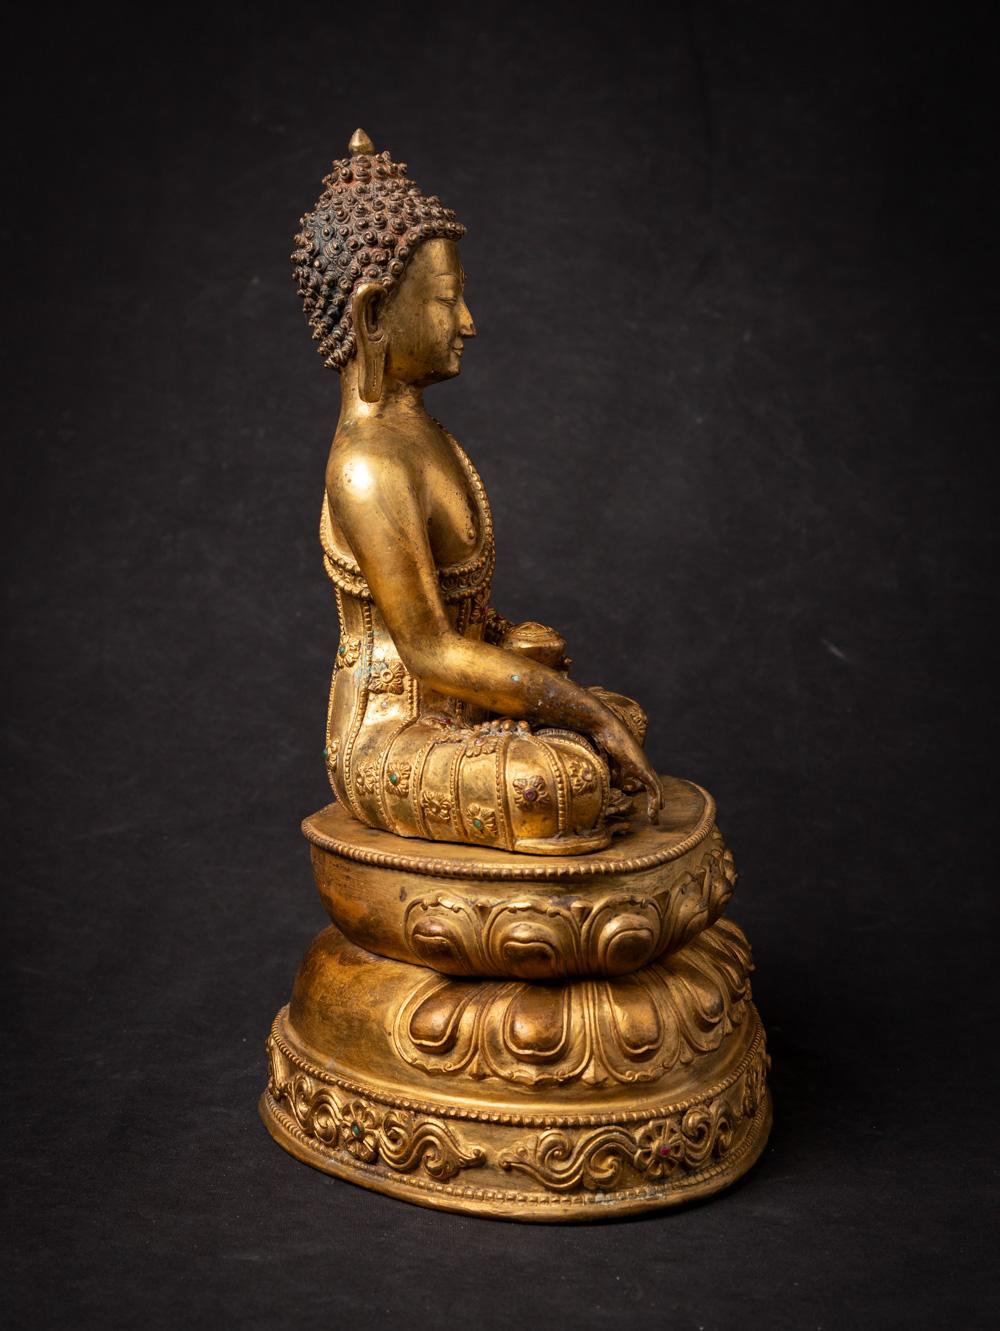 20th Century Mid-20th century old bronze Nepali Buddha statue i20.5nlaid with real gem stones